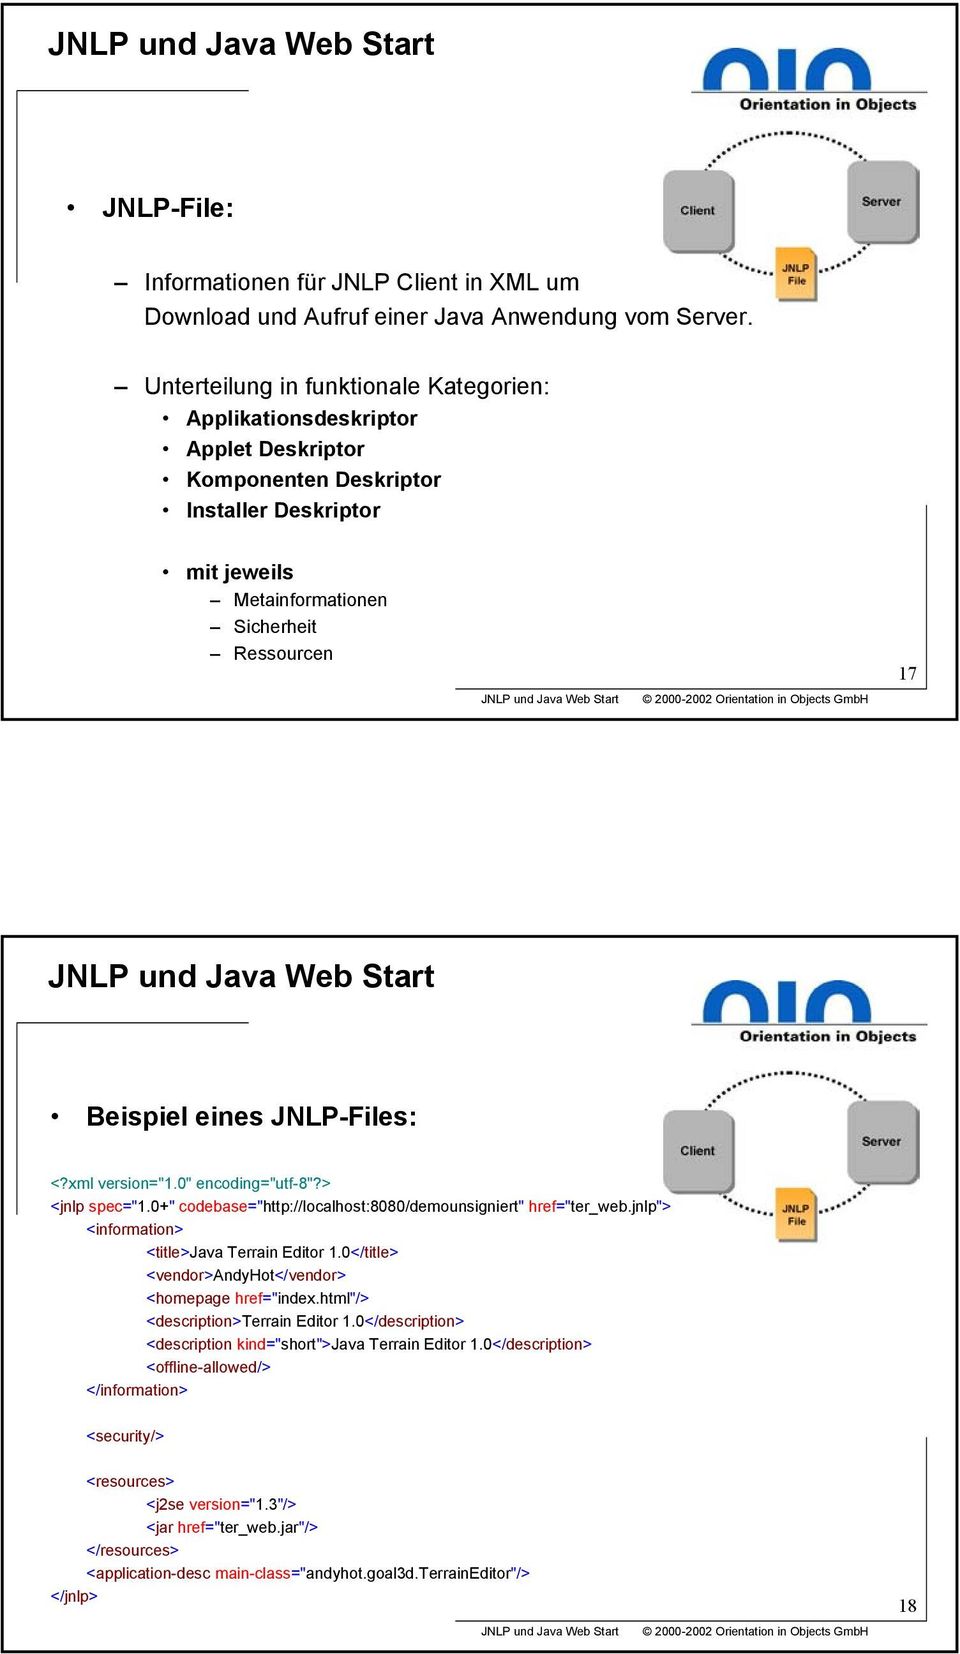 JNLP-Files: <?xml version="1.0" encoding="utf-8"?> <jnlp spec="1.0+" codebase="http://localhost:8080/demounsigniert" href="ter_web.jnlp"> <information> <title>java Terrain Editor 1.